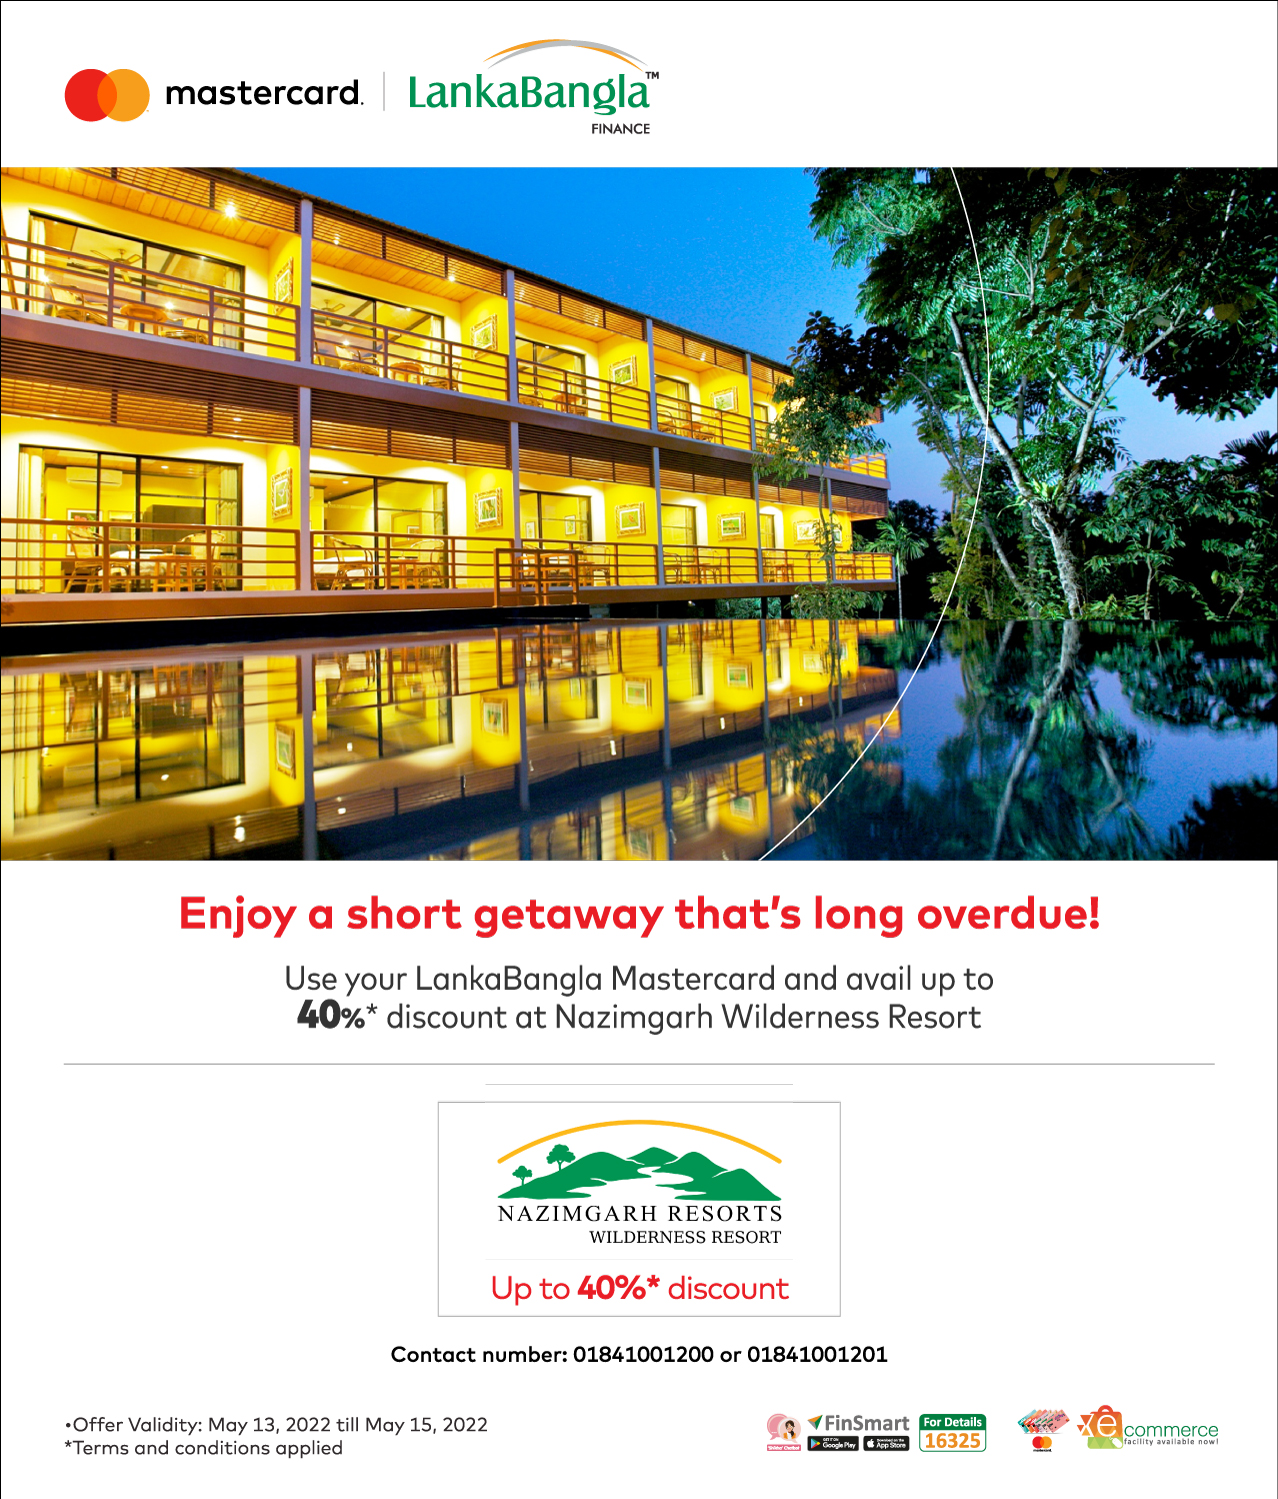 LBFL Mastercard Nazimgarh Wilderness Resort Offer